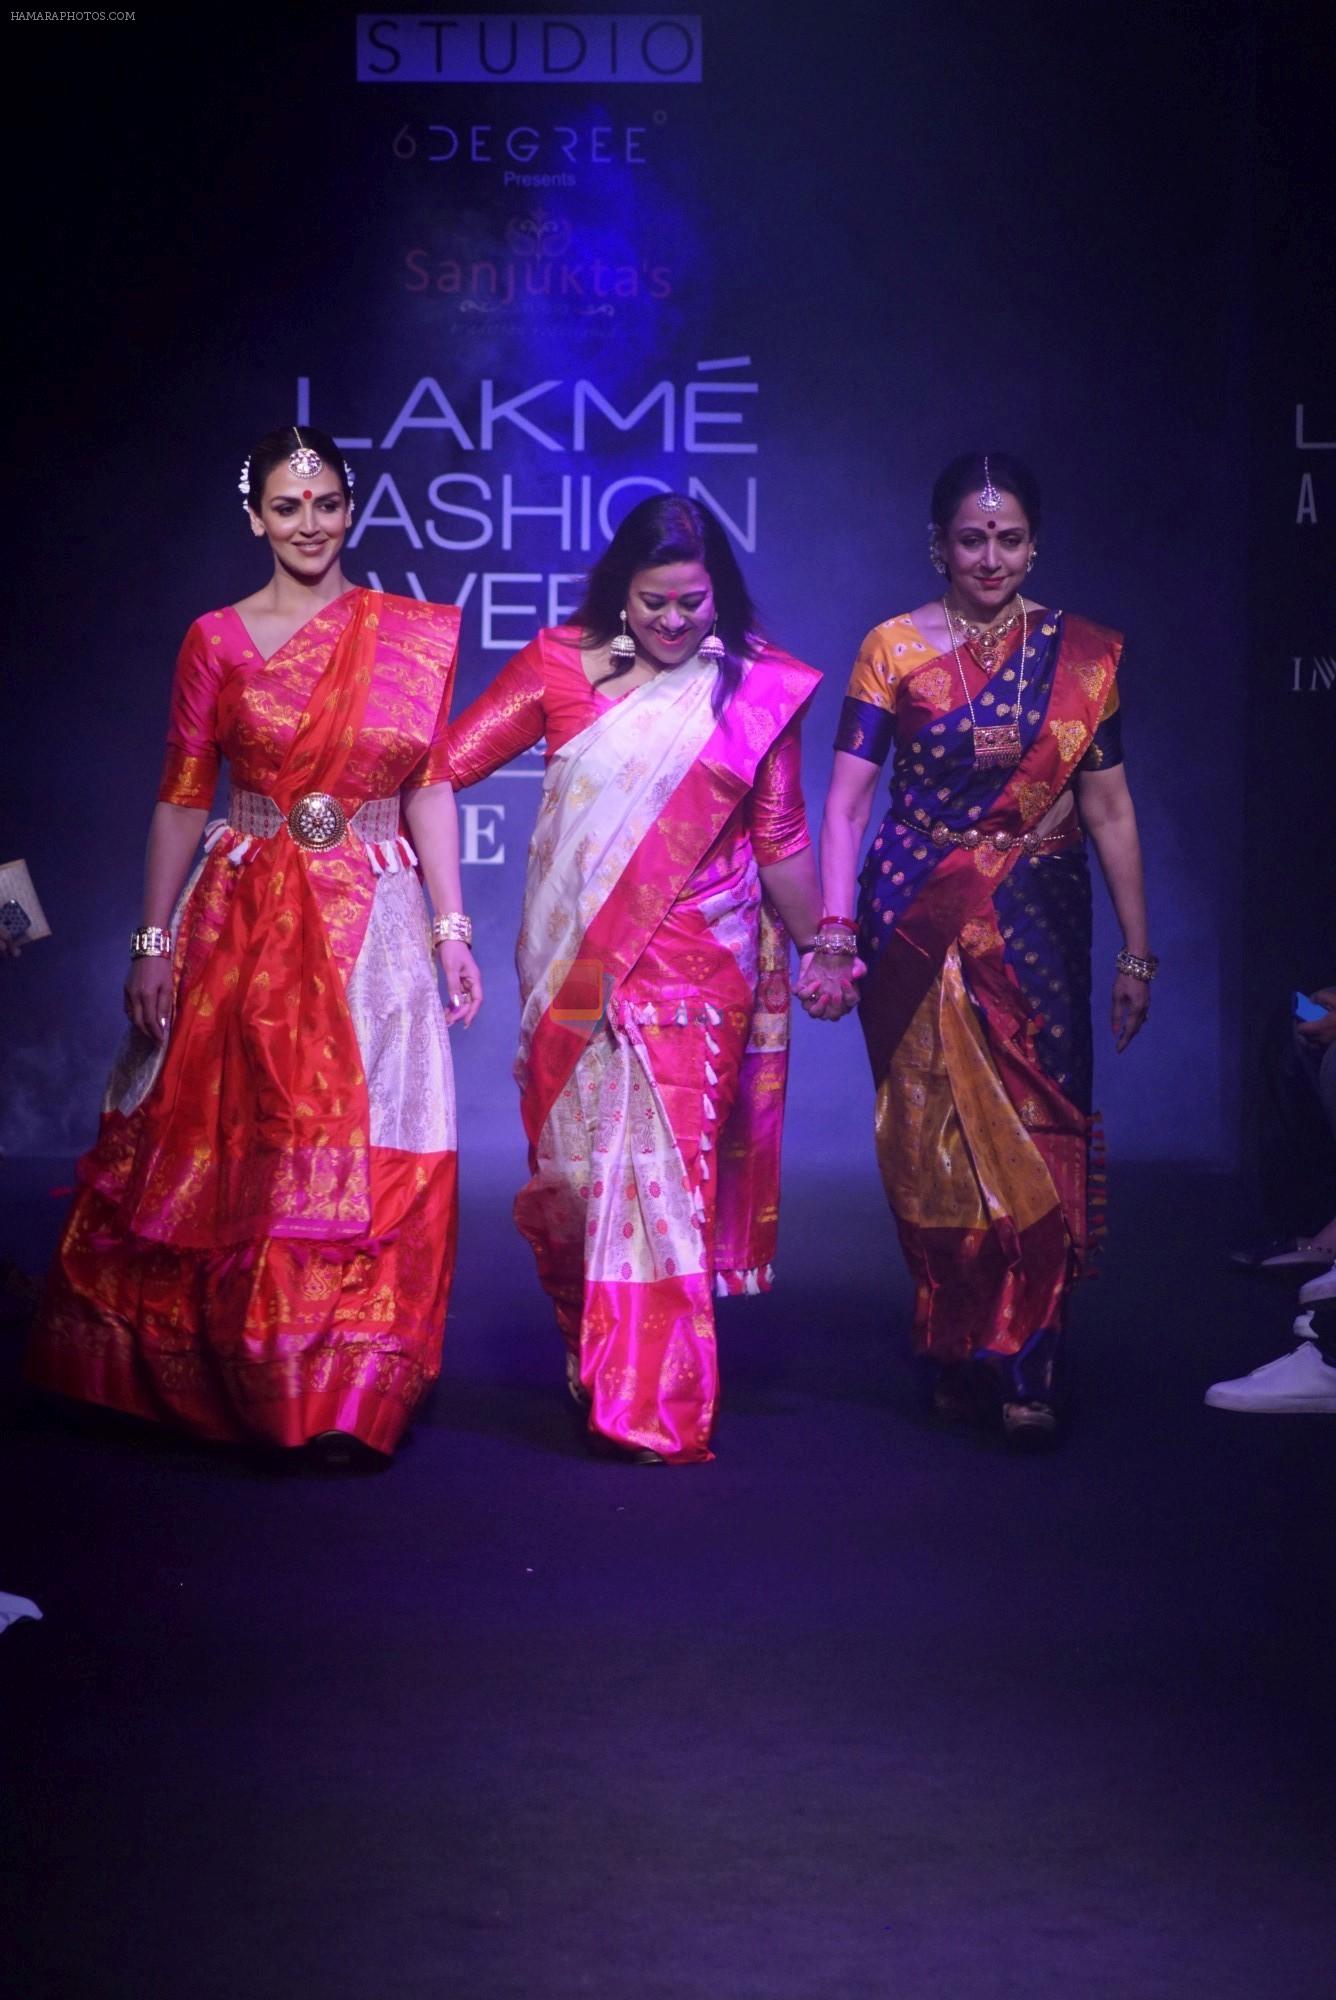 Esha Deol, Hema Malini walk the ramp for 6 degree studio Show at lakme fashion week on 27th Aug 2018